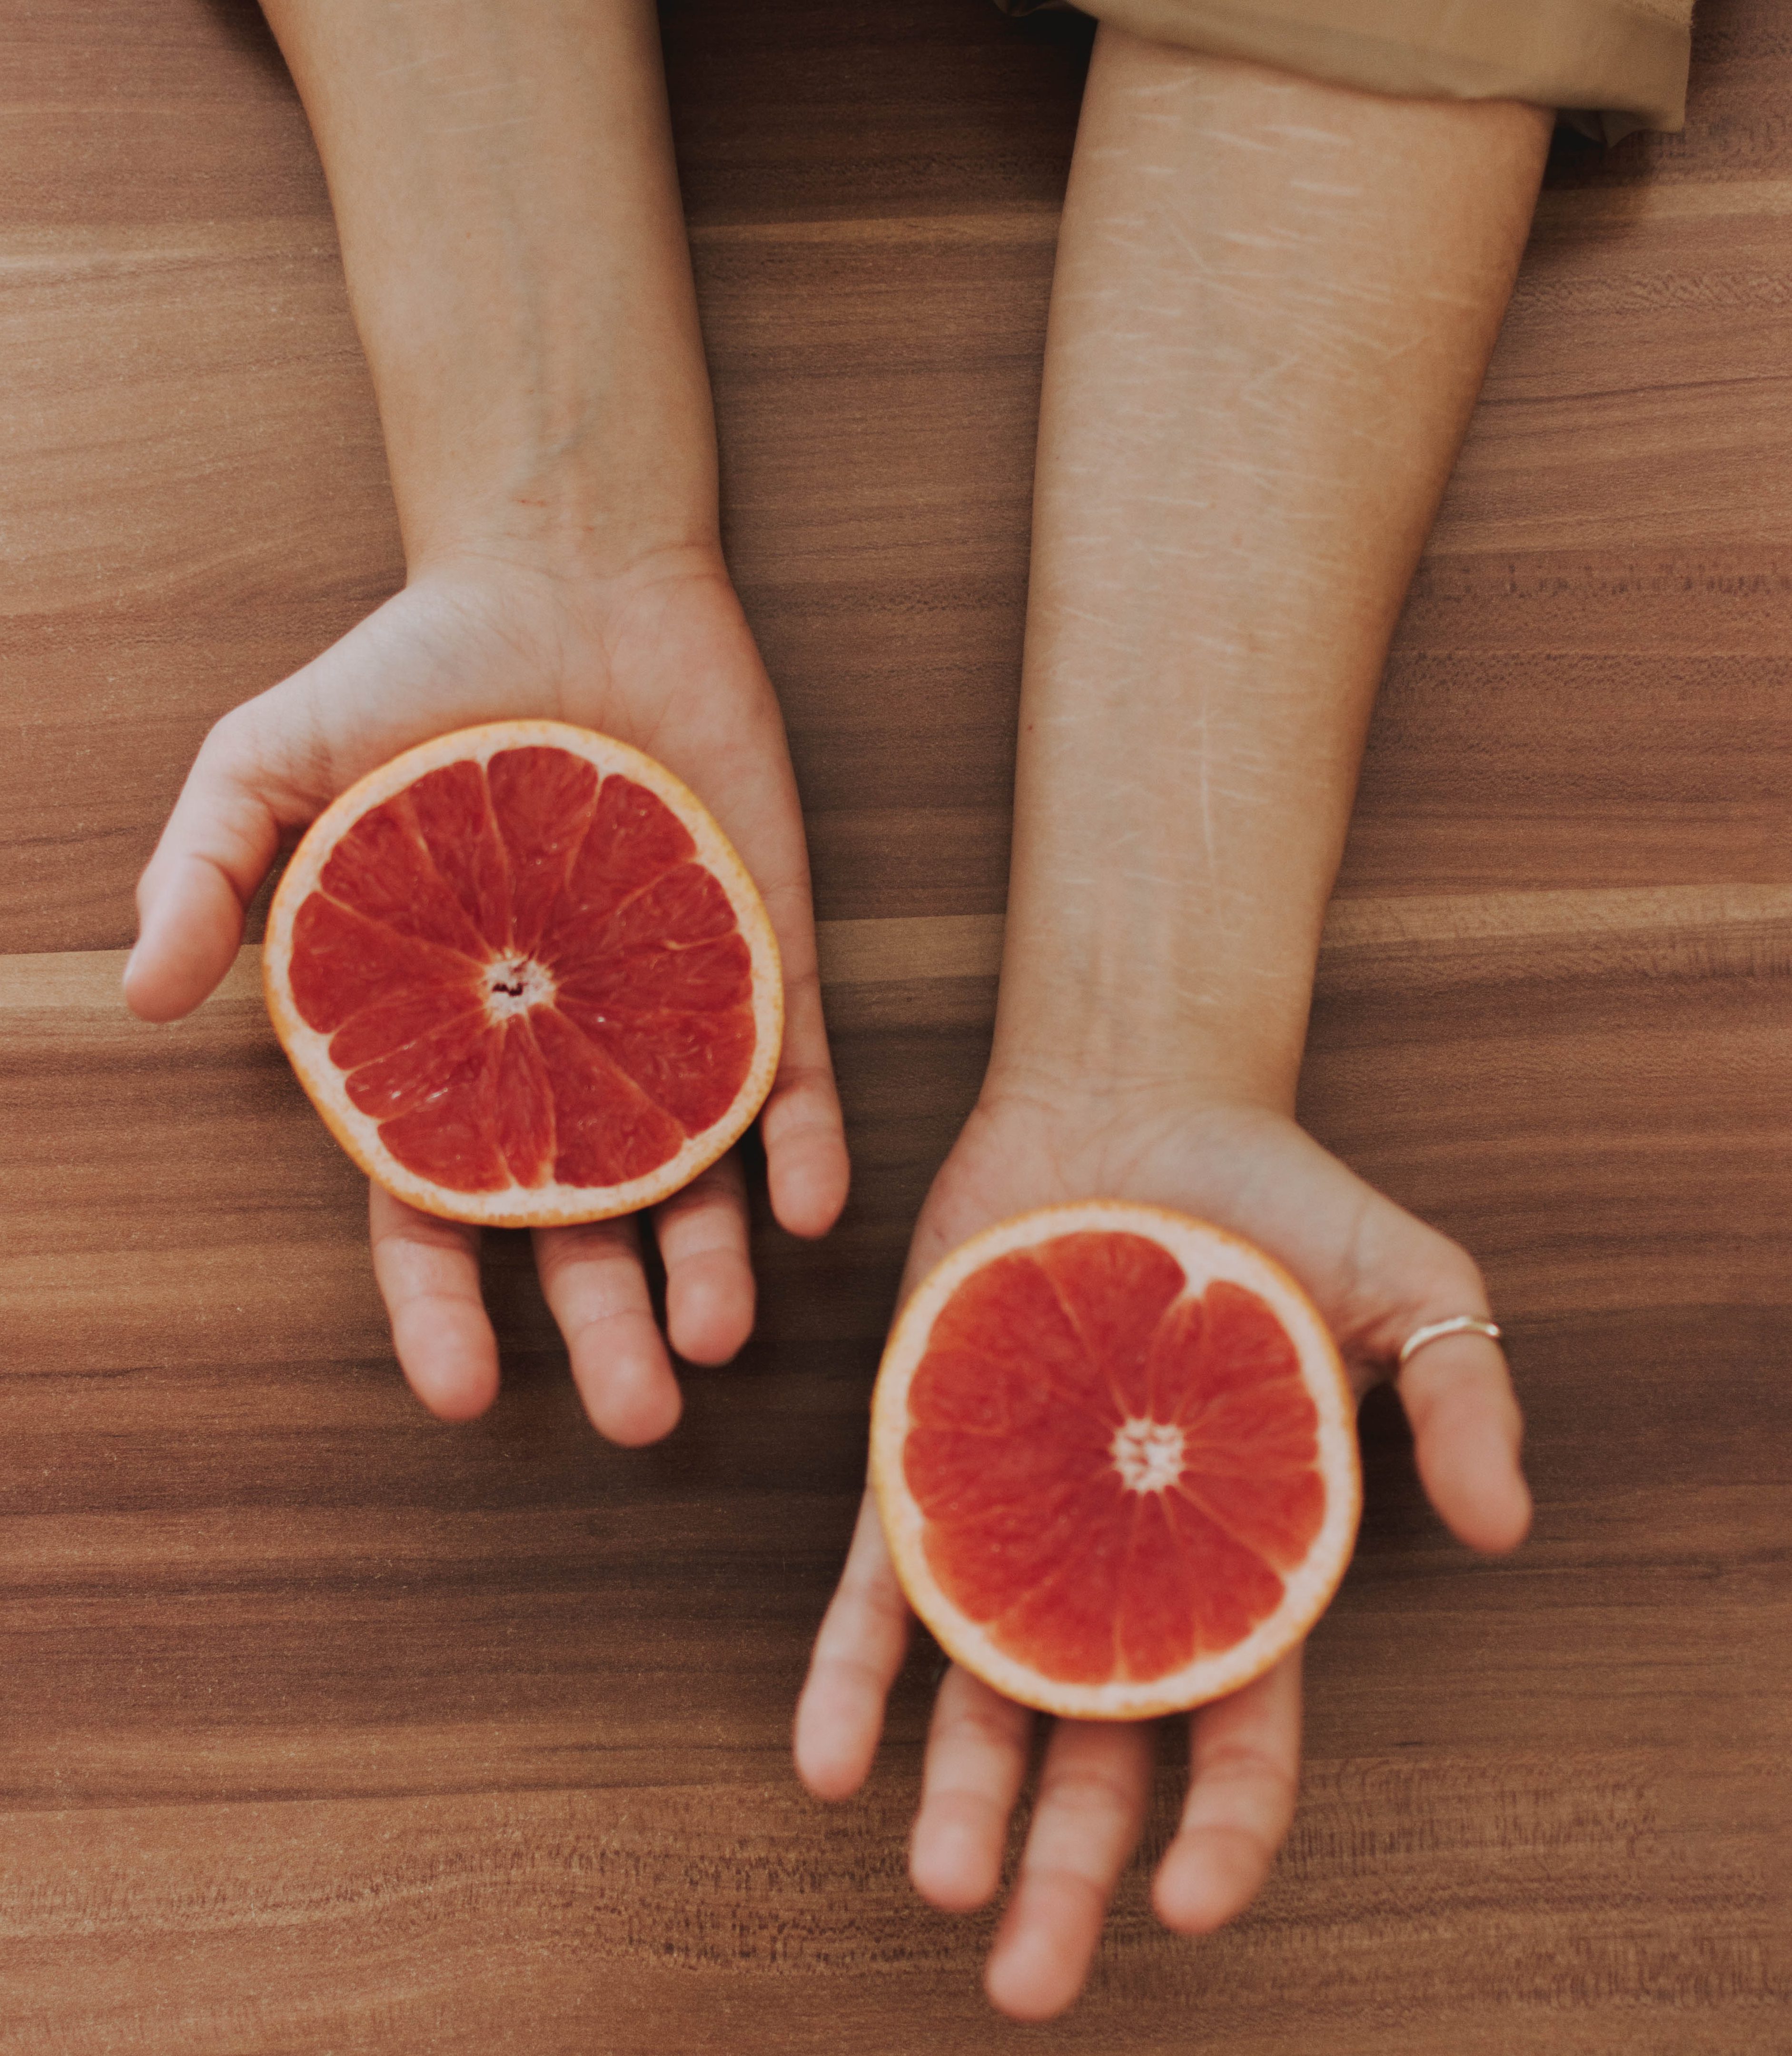 Пальцы в грейпфруте